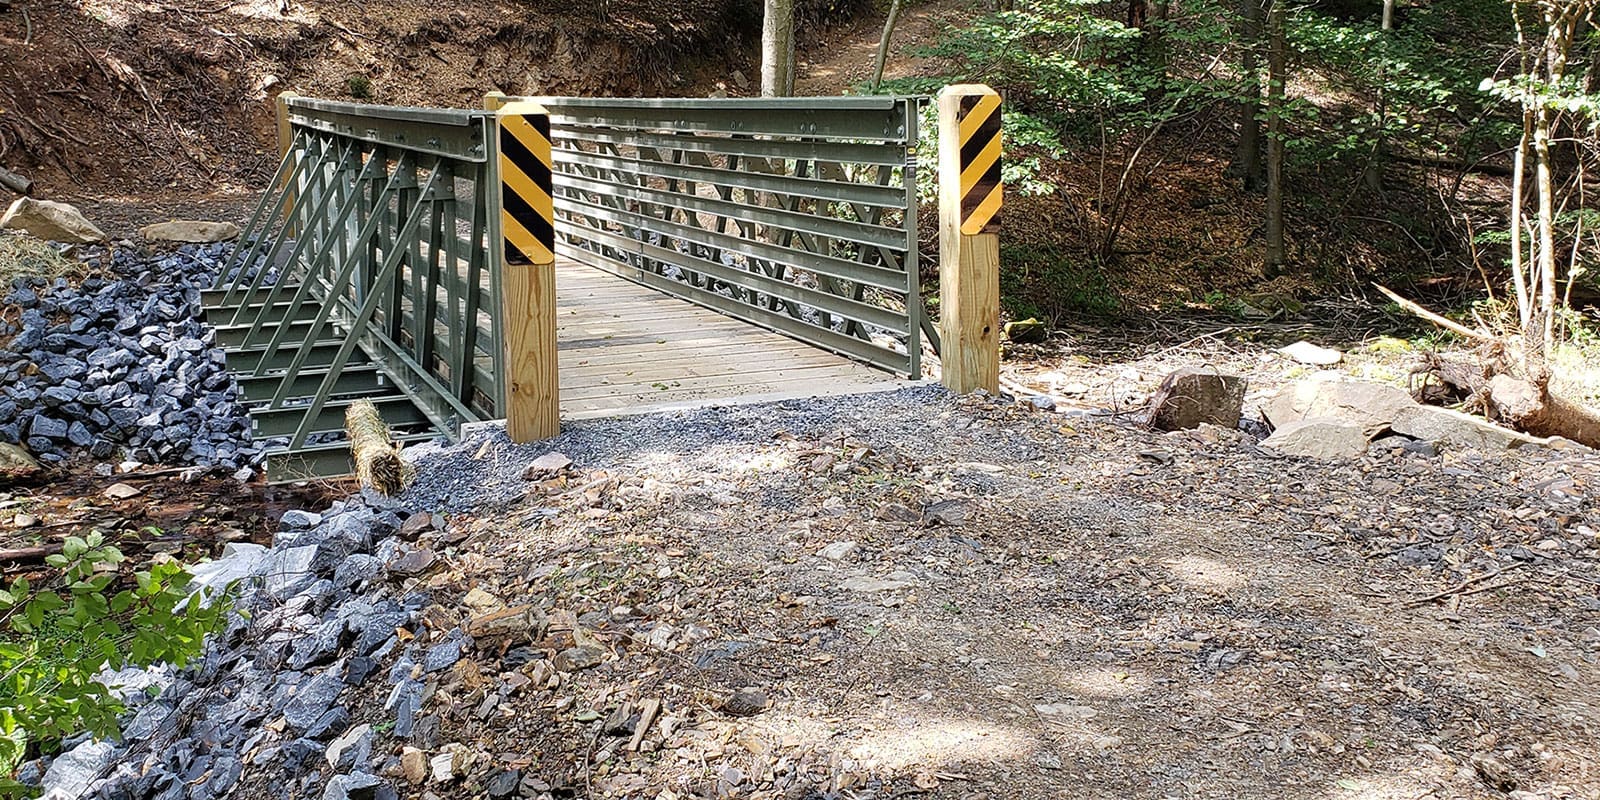 OSCO ReadySpan pedestrian bridge in a wooded area spanning a creek with rocks